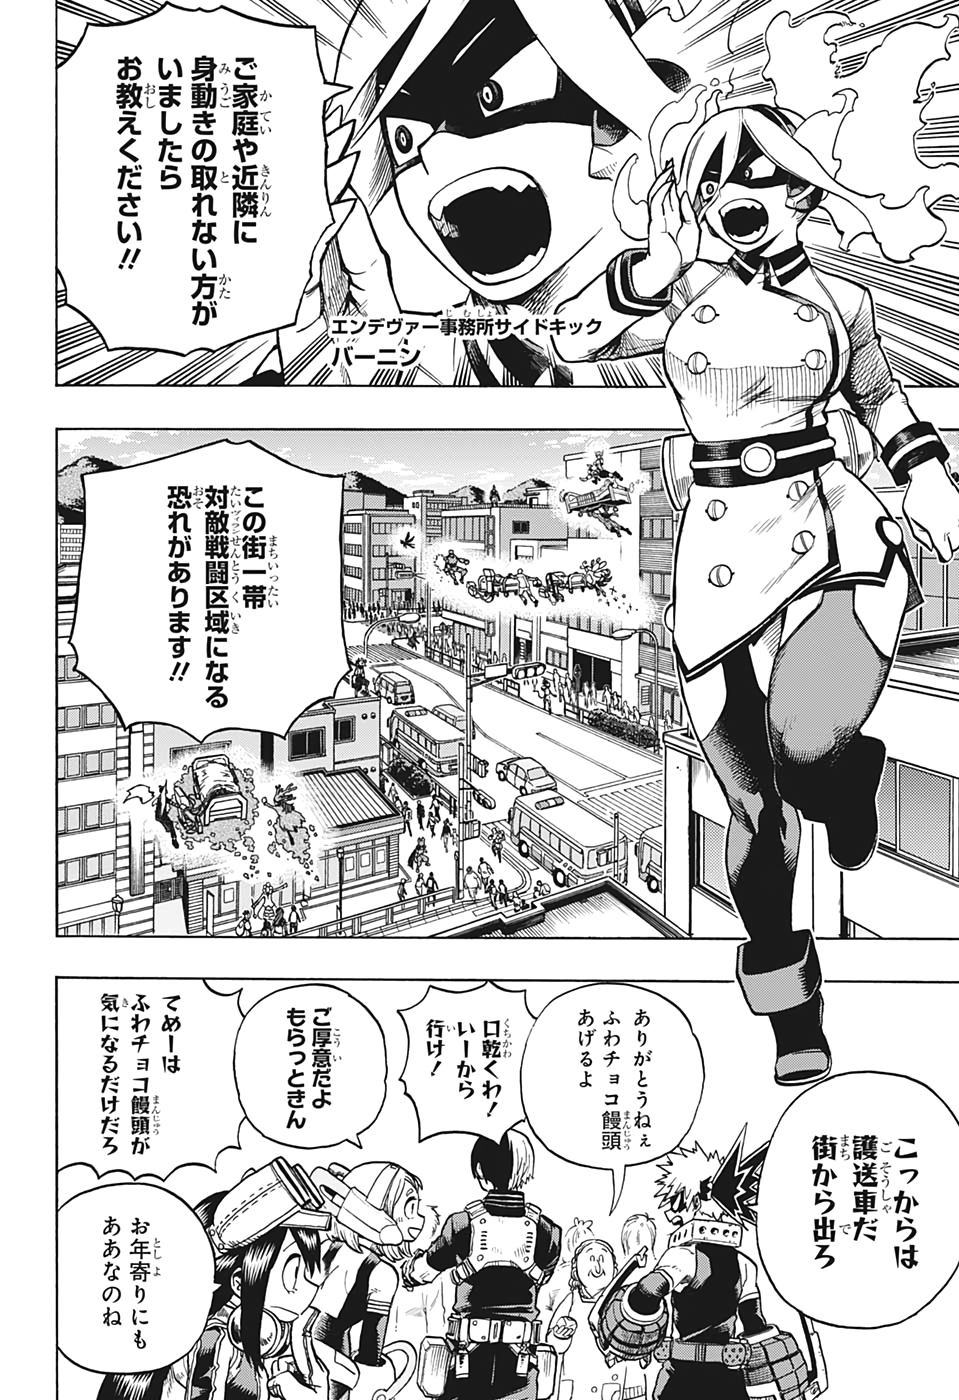 Boku no Hero Academia - Chapter 272 - Page 2